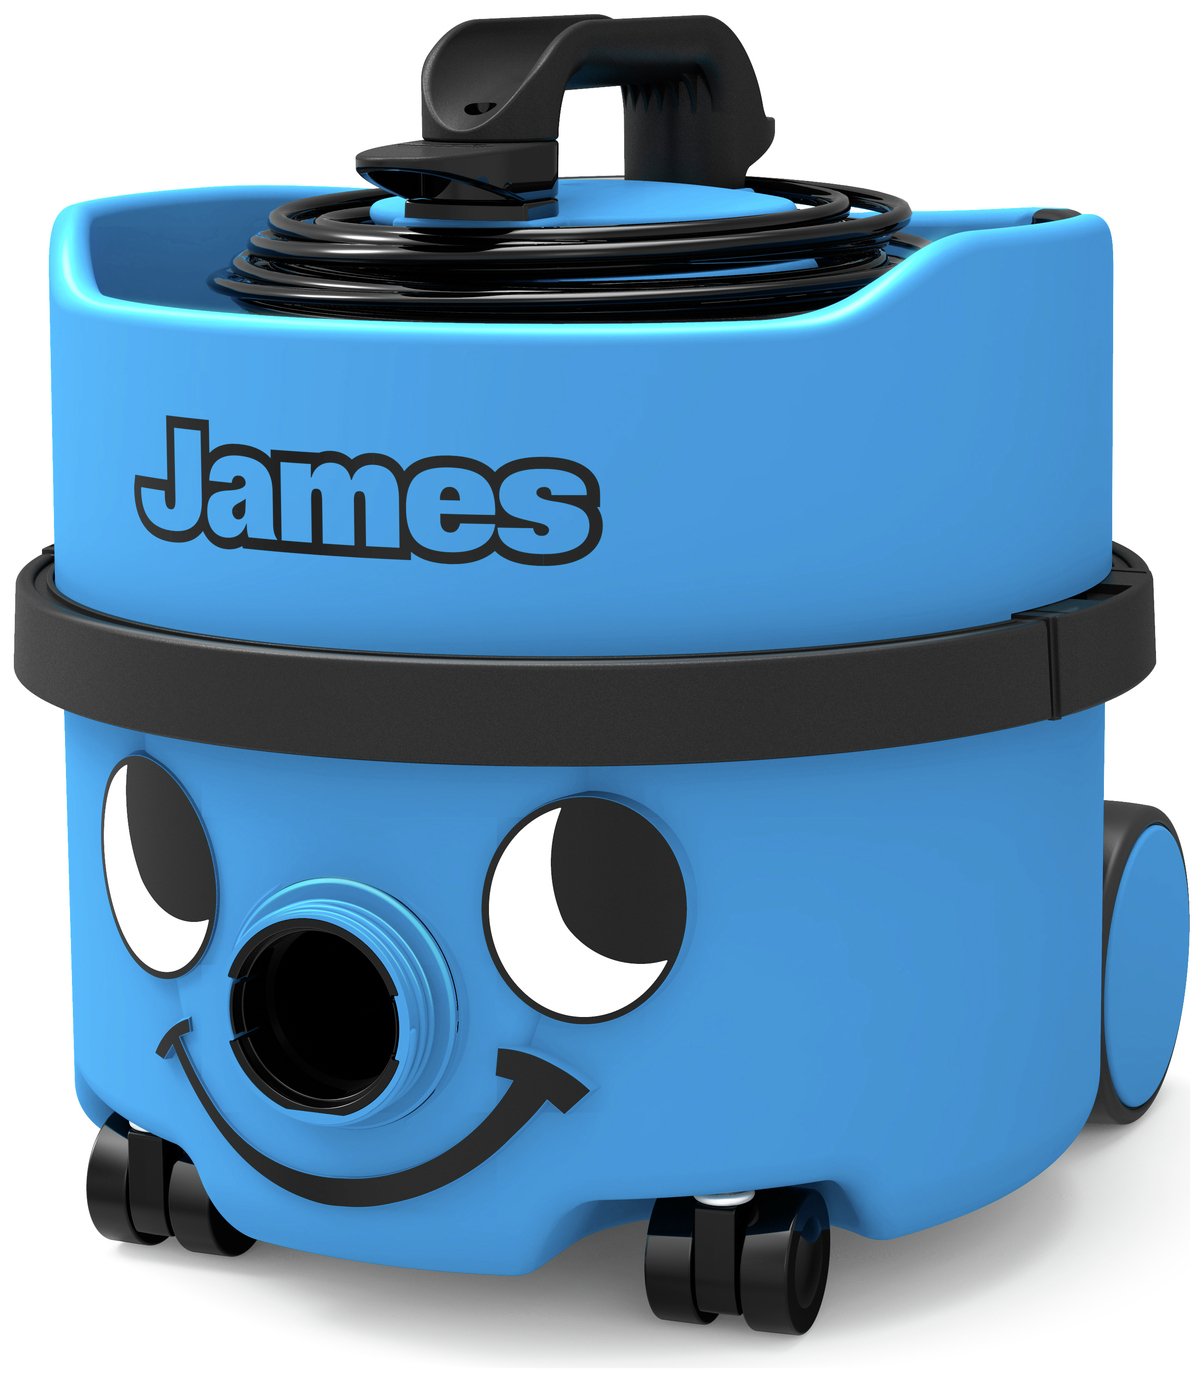 James JVP 180 Bagged Cylinder Vacuum Cleaner Review